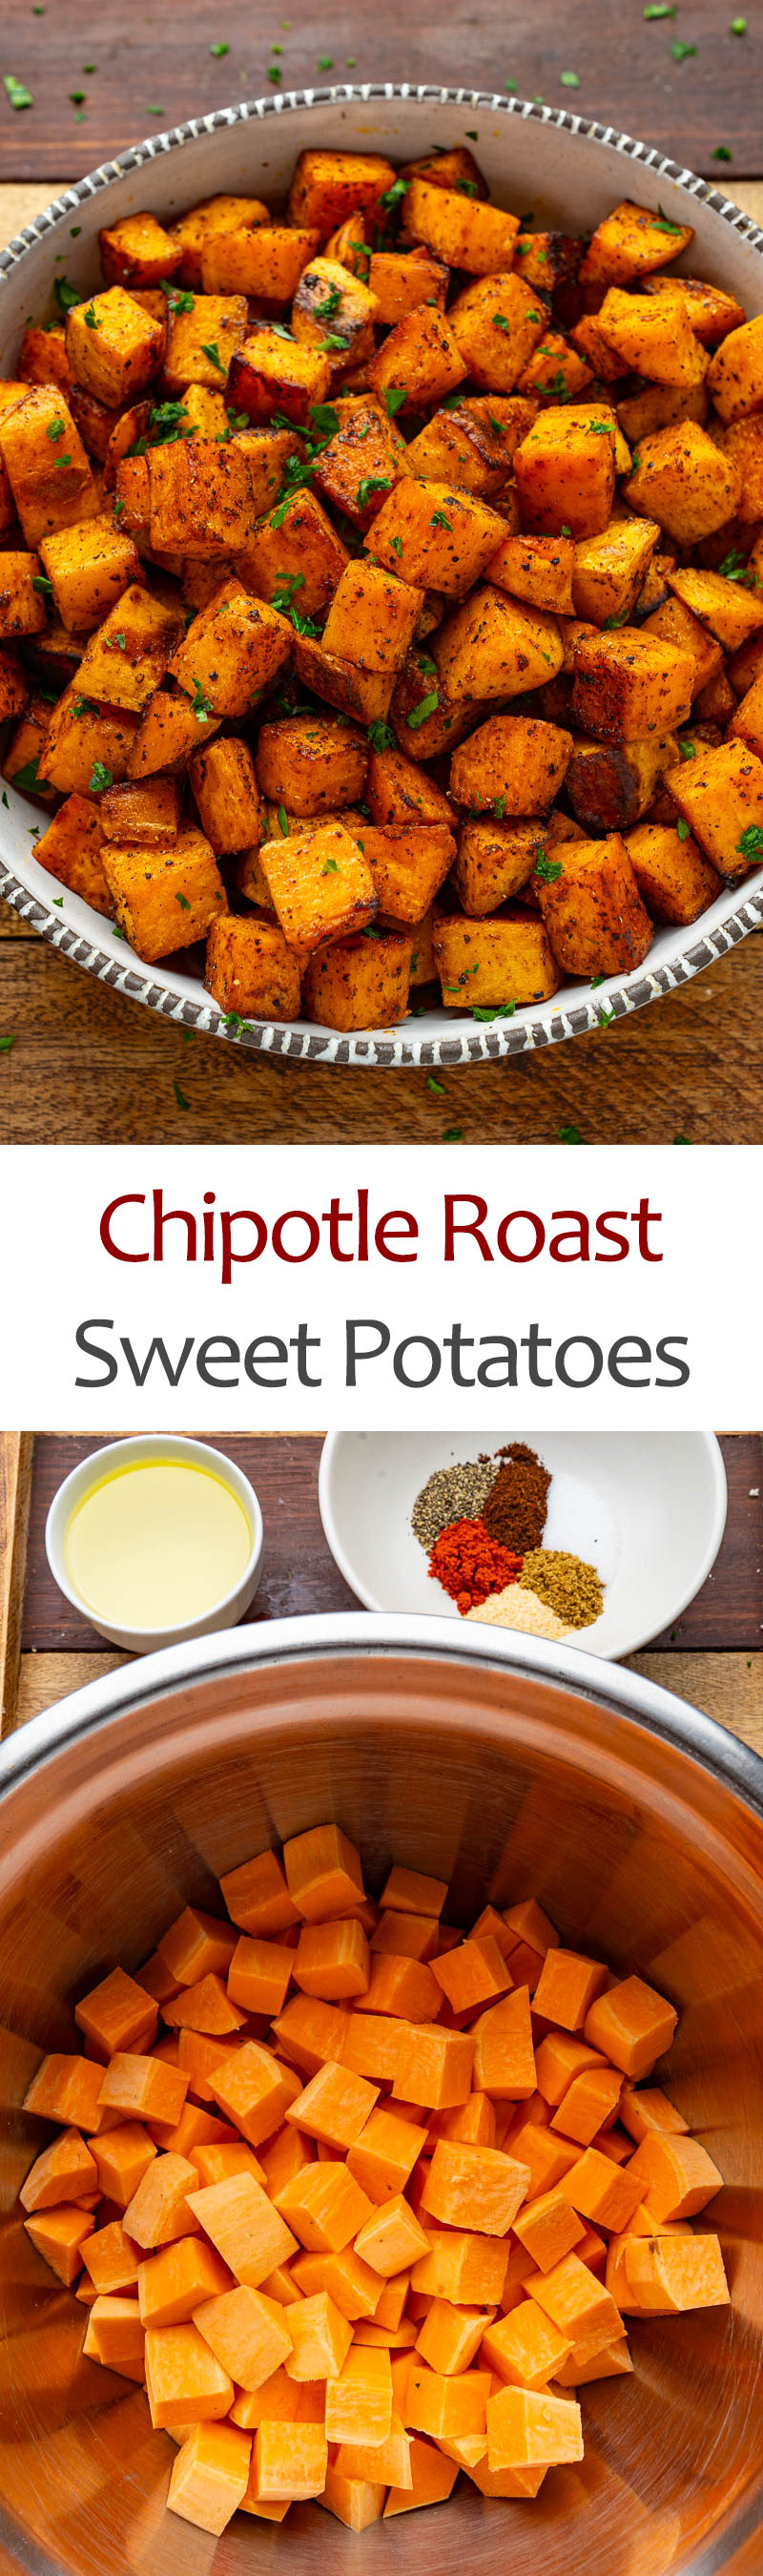 Chipotle Roast Sweet Potatoes